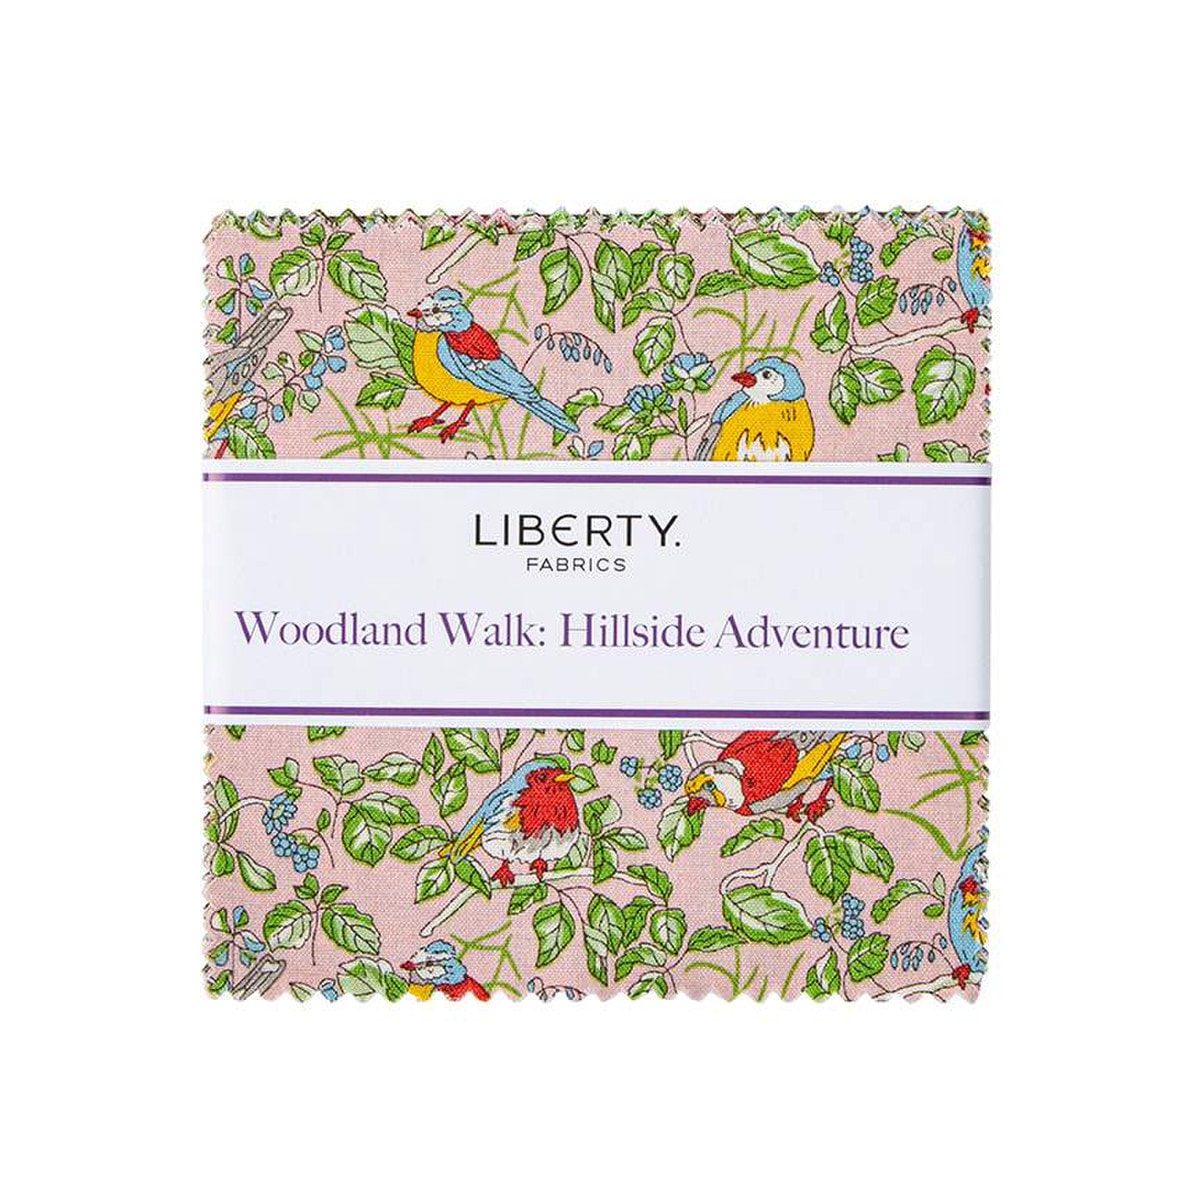 Woodland Walk 5" Stacker | Liberty Fabrics | 42 PCs - Hillside Adventure